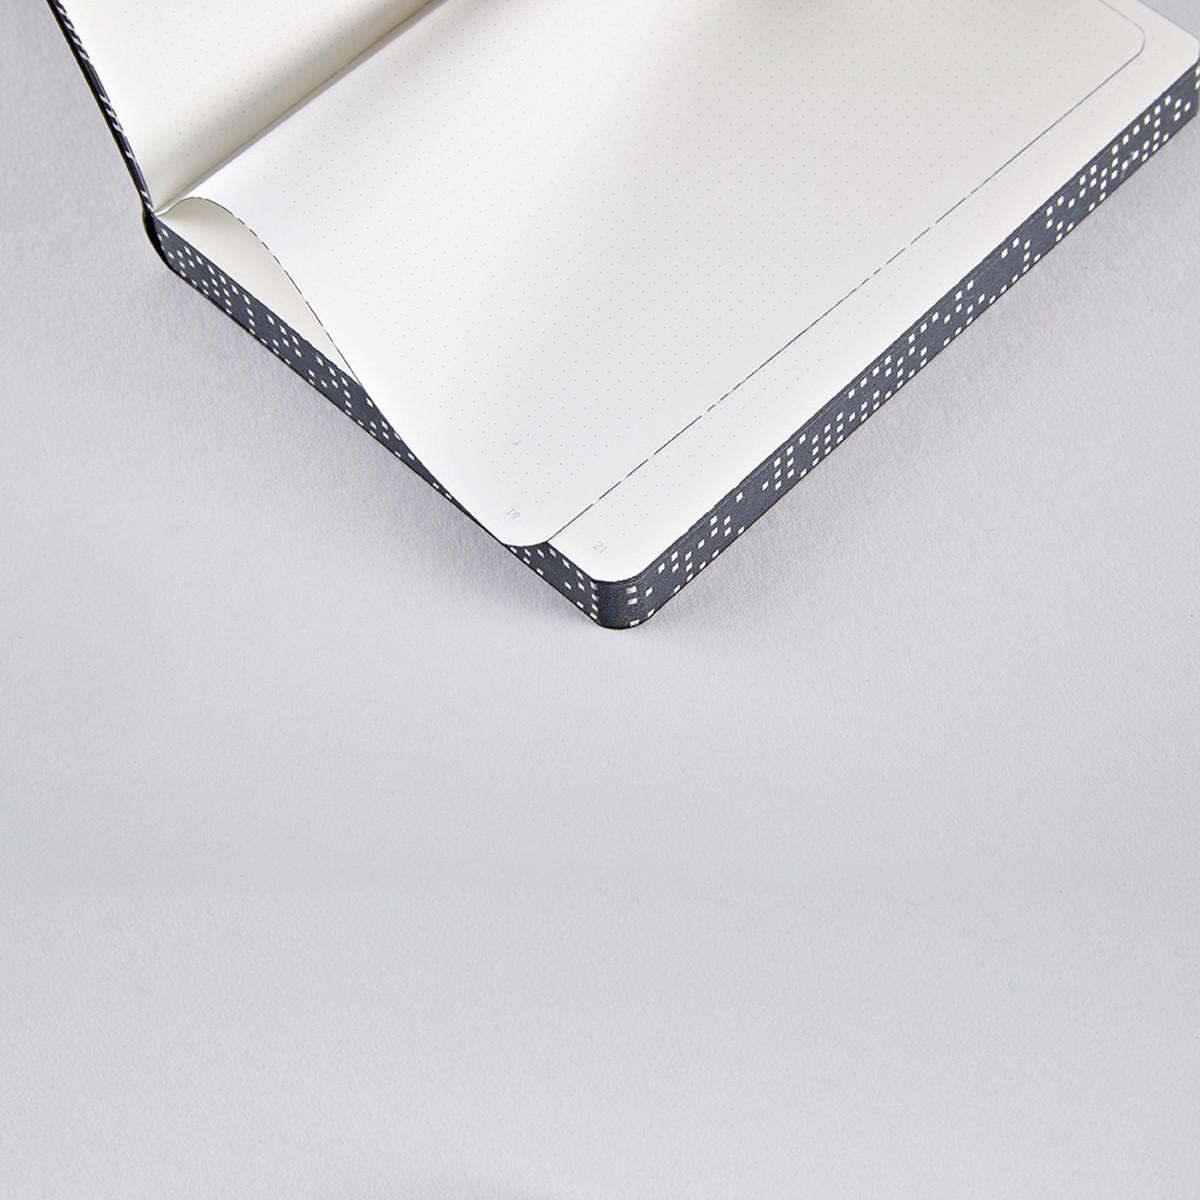 Nuuna Notebook Graphic S - ANALOG